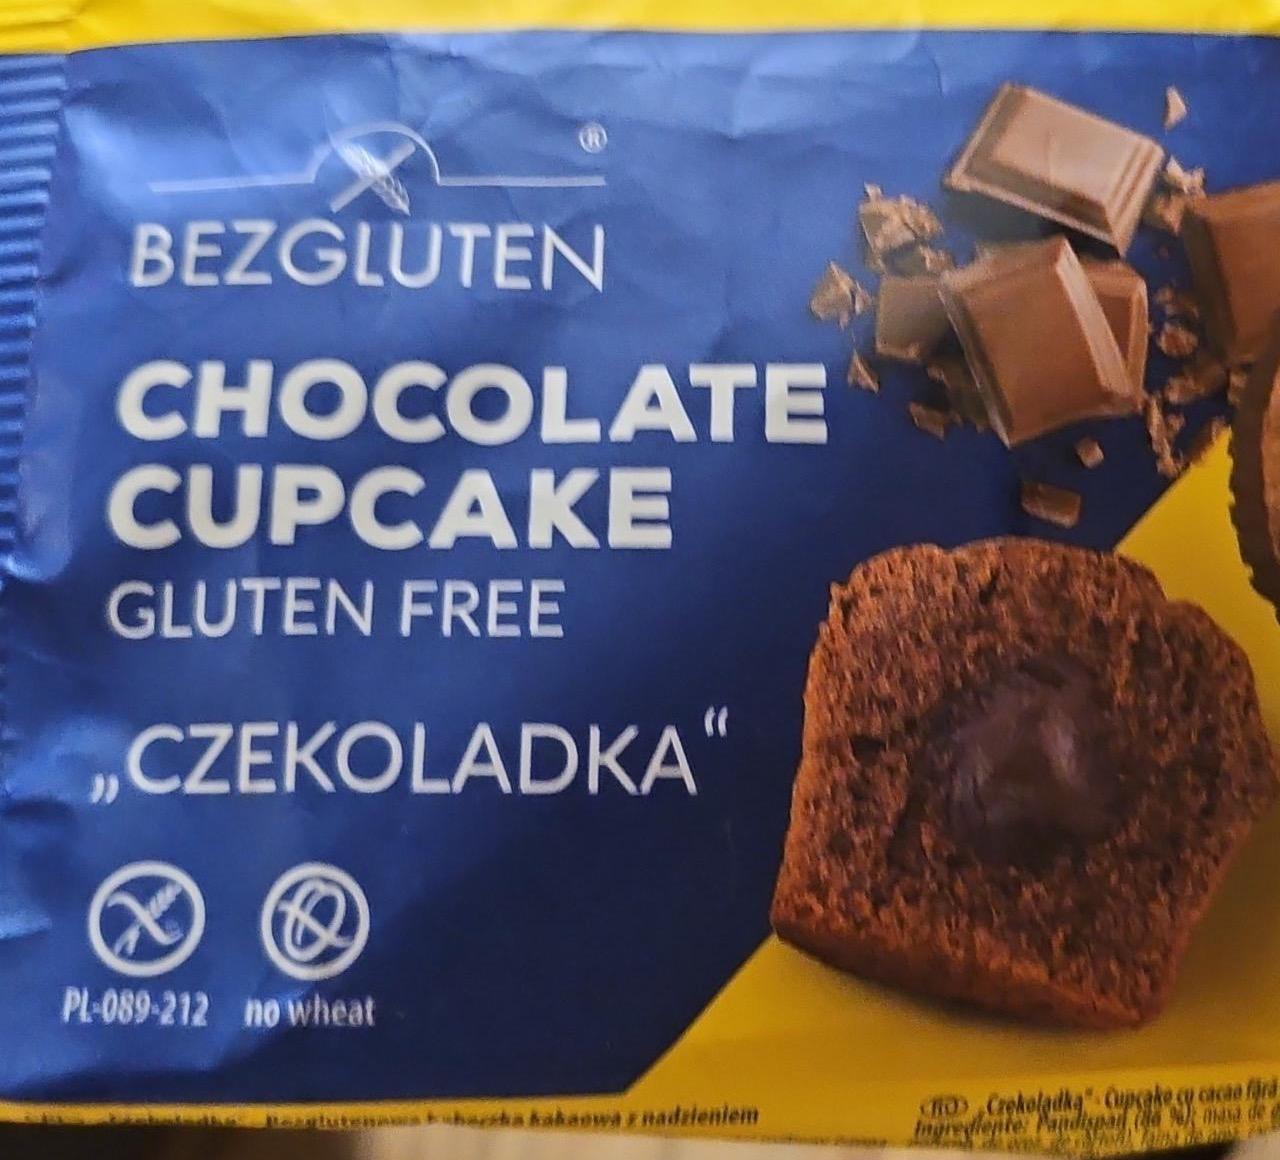 Zdjęcia - Chocolate cupcake Gluten free 'Czekoladka' Bezgluten